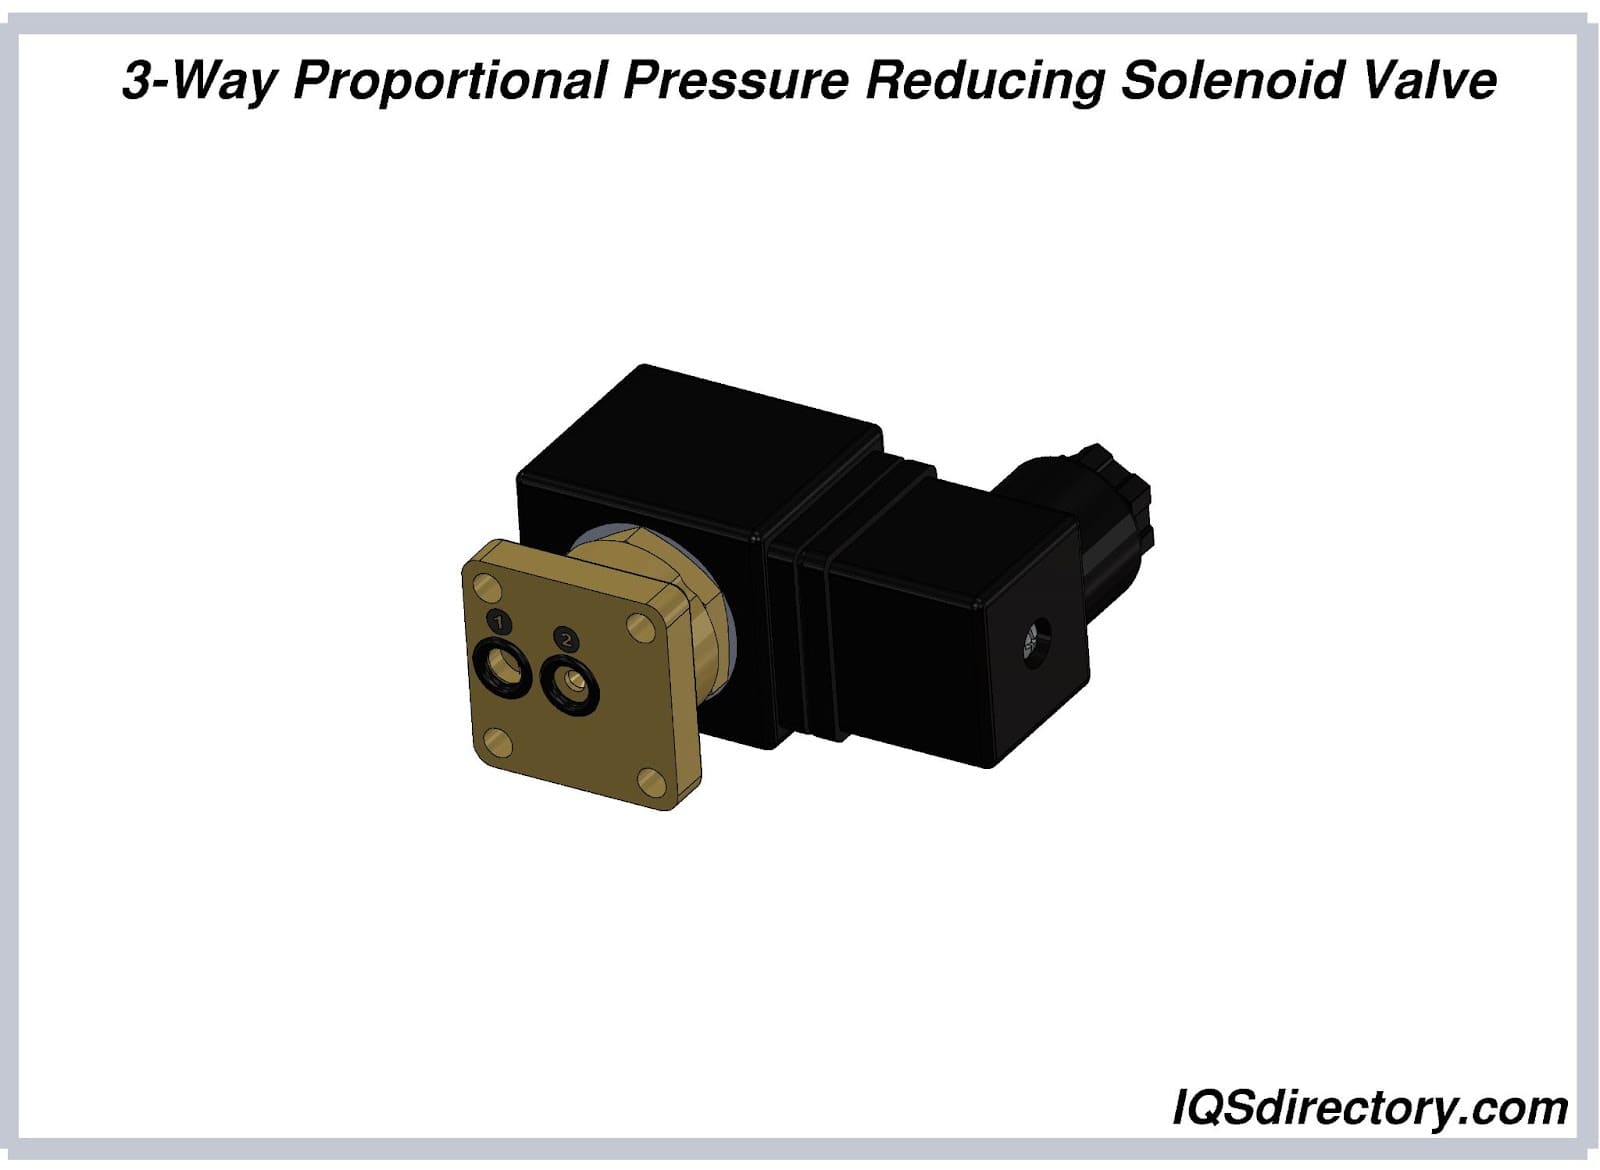 3-Way Proportional Pressure Reducing Solenoid Valve